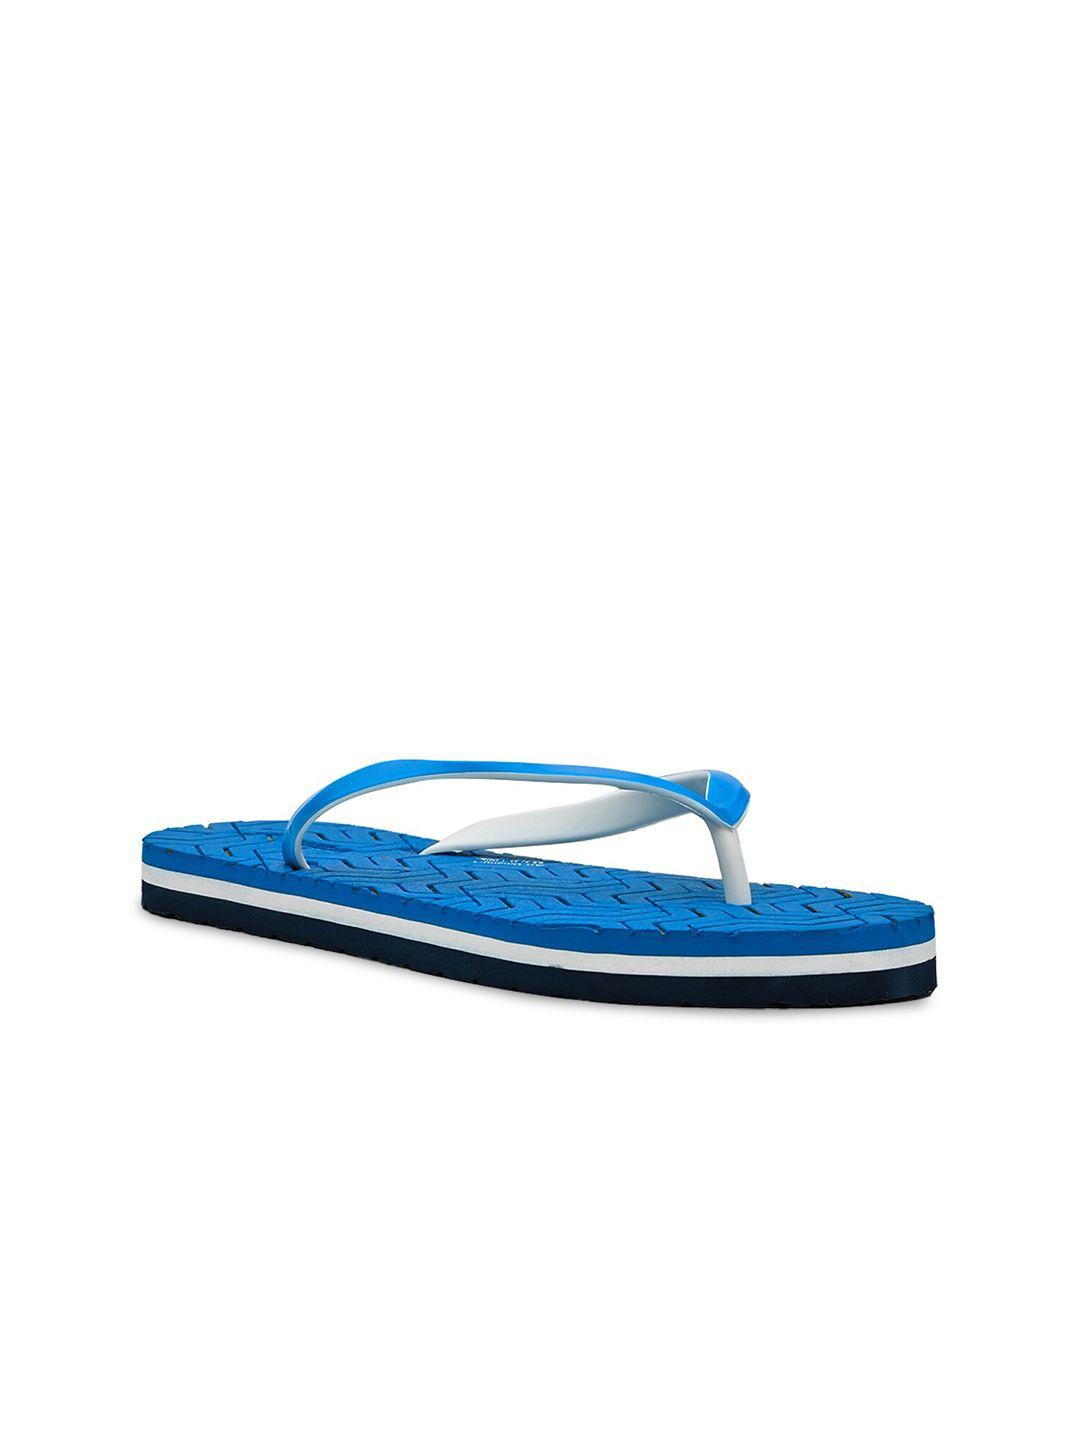 tucson women blue rubber thong flip-flops